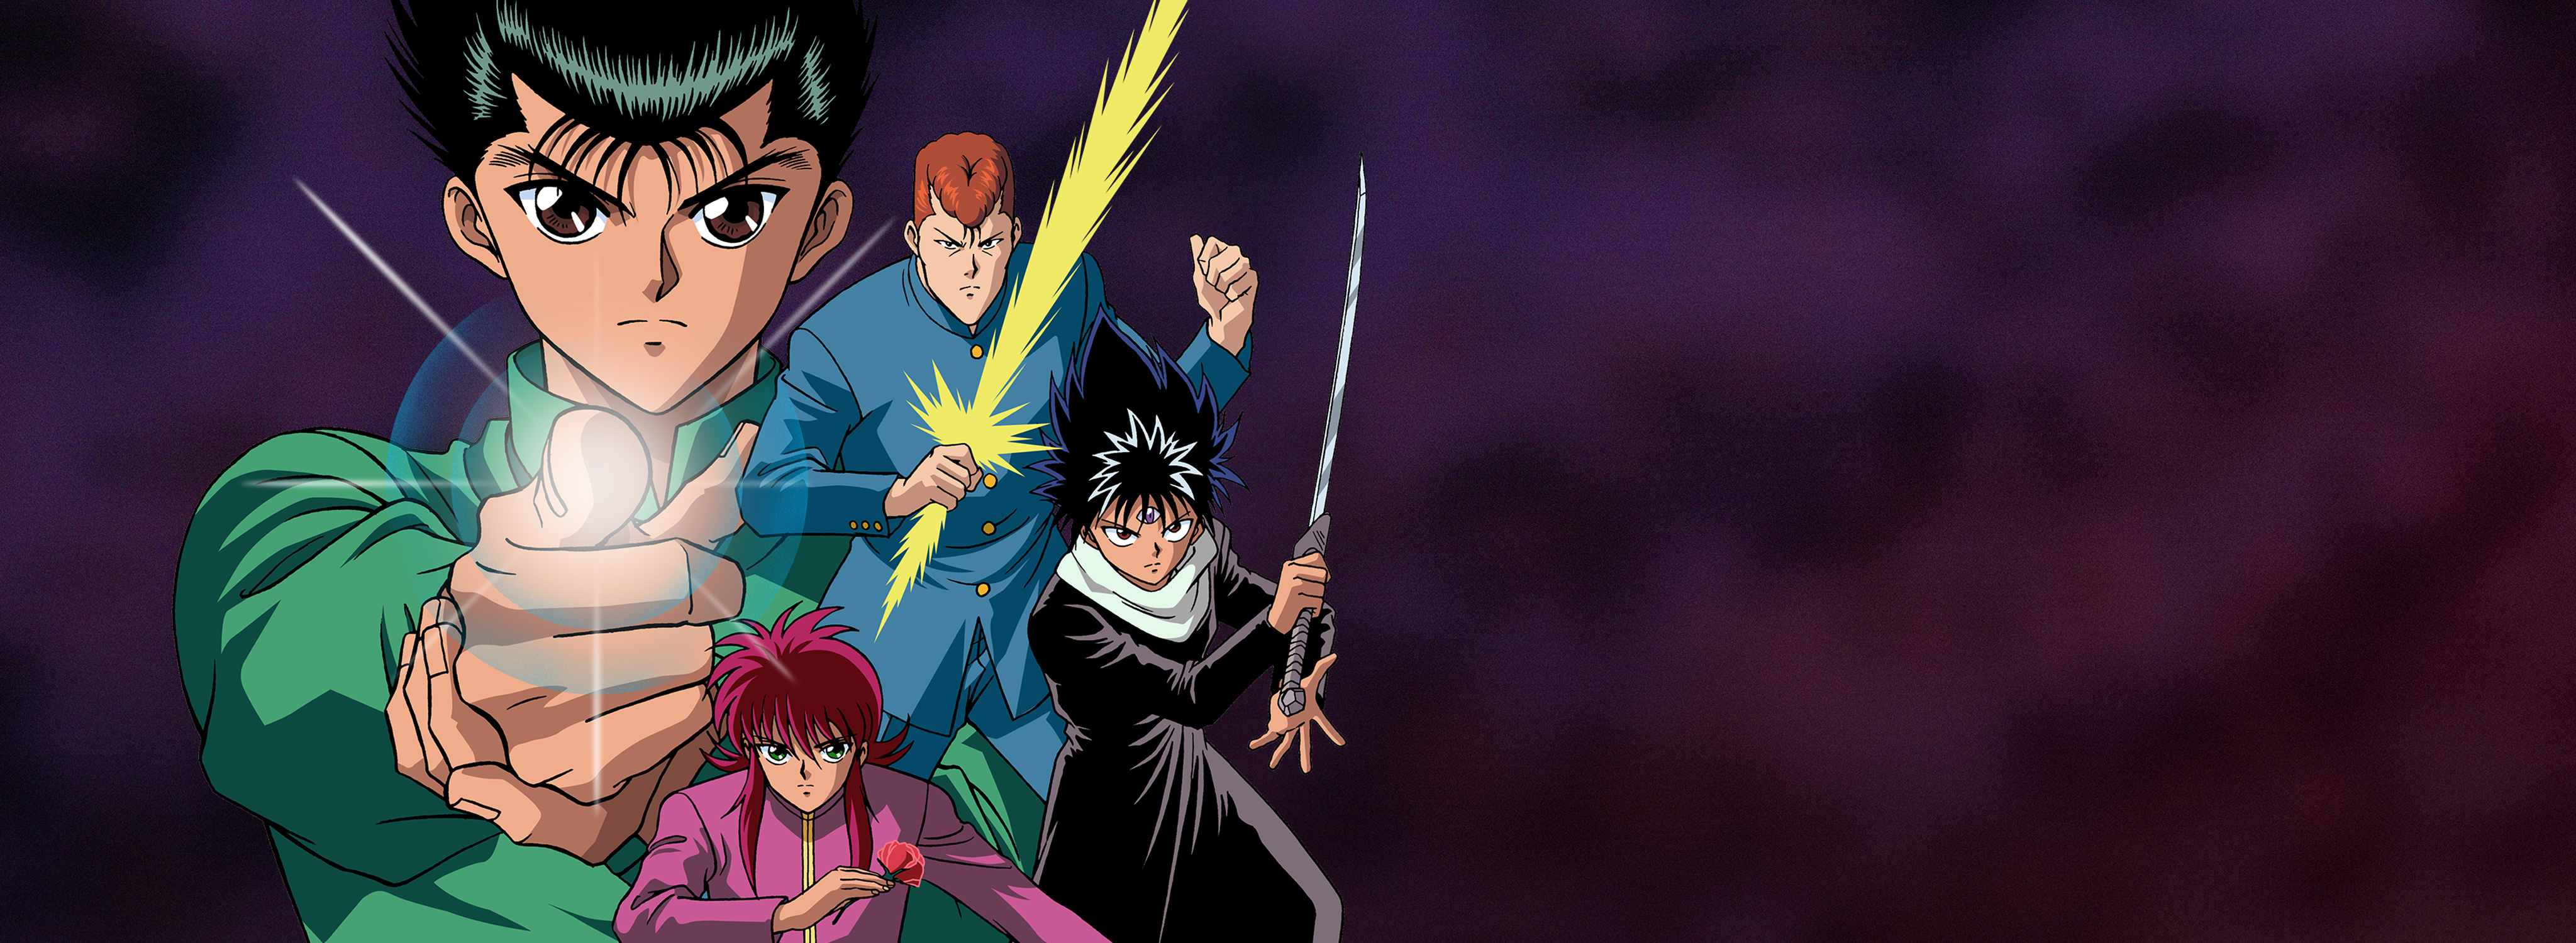 fondo de pantalla de yu yu hakusho,anime,dibujos animados,cabello negro,personaje de ficción,cg artwork